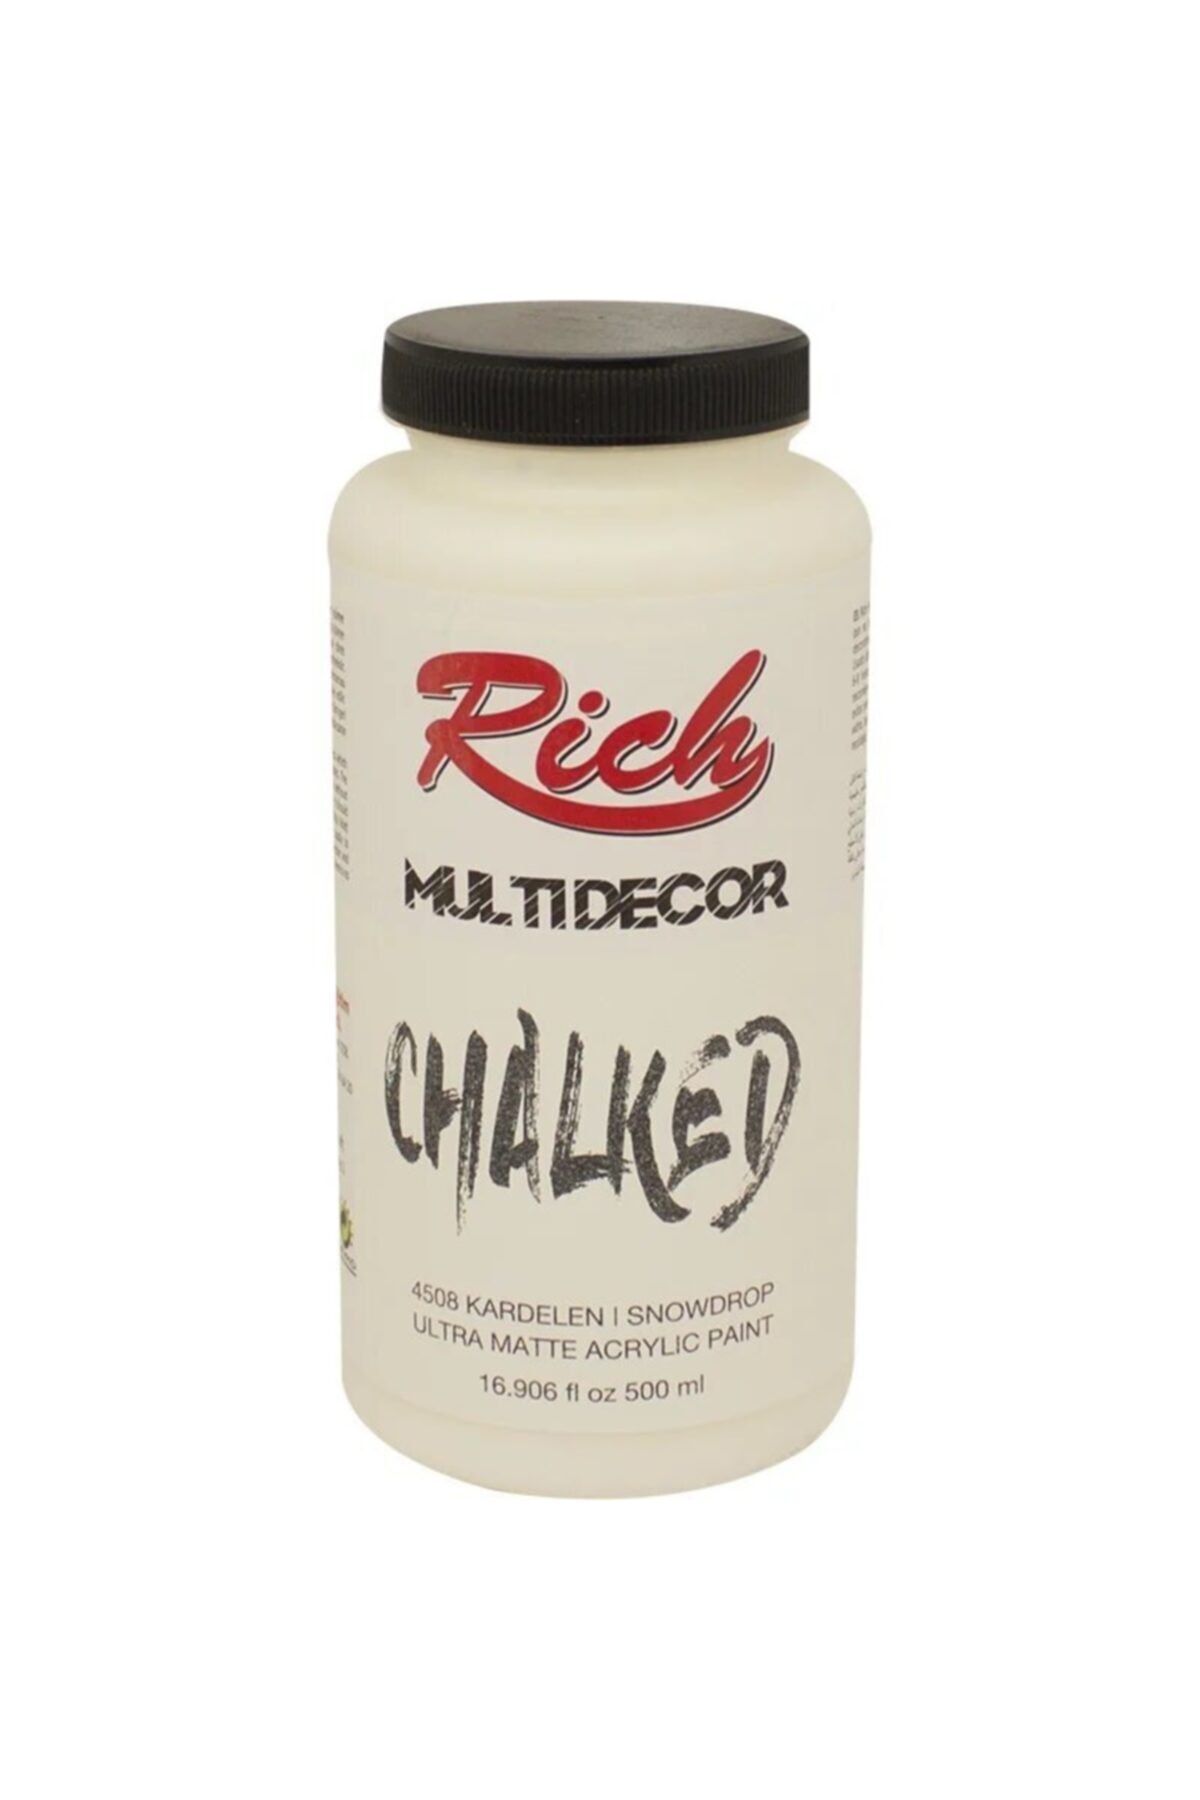 Rich Multidecor Chalked - 500cc - Kardelen - N:4508